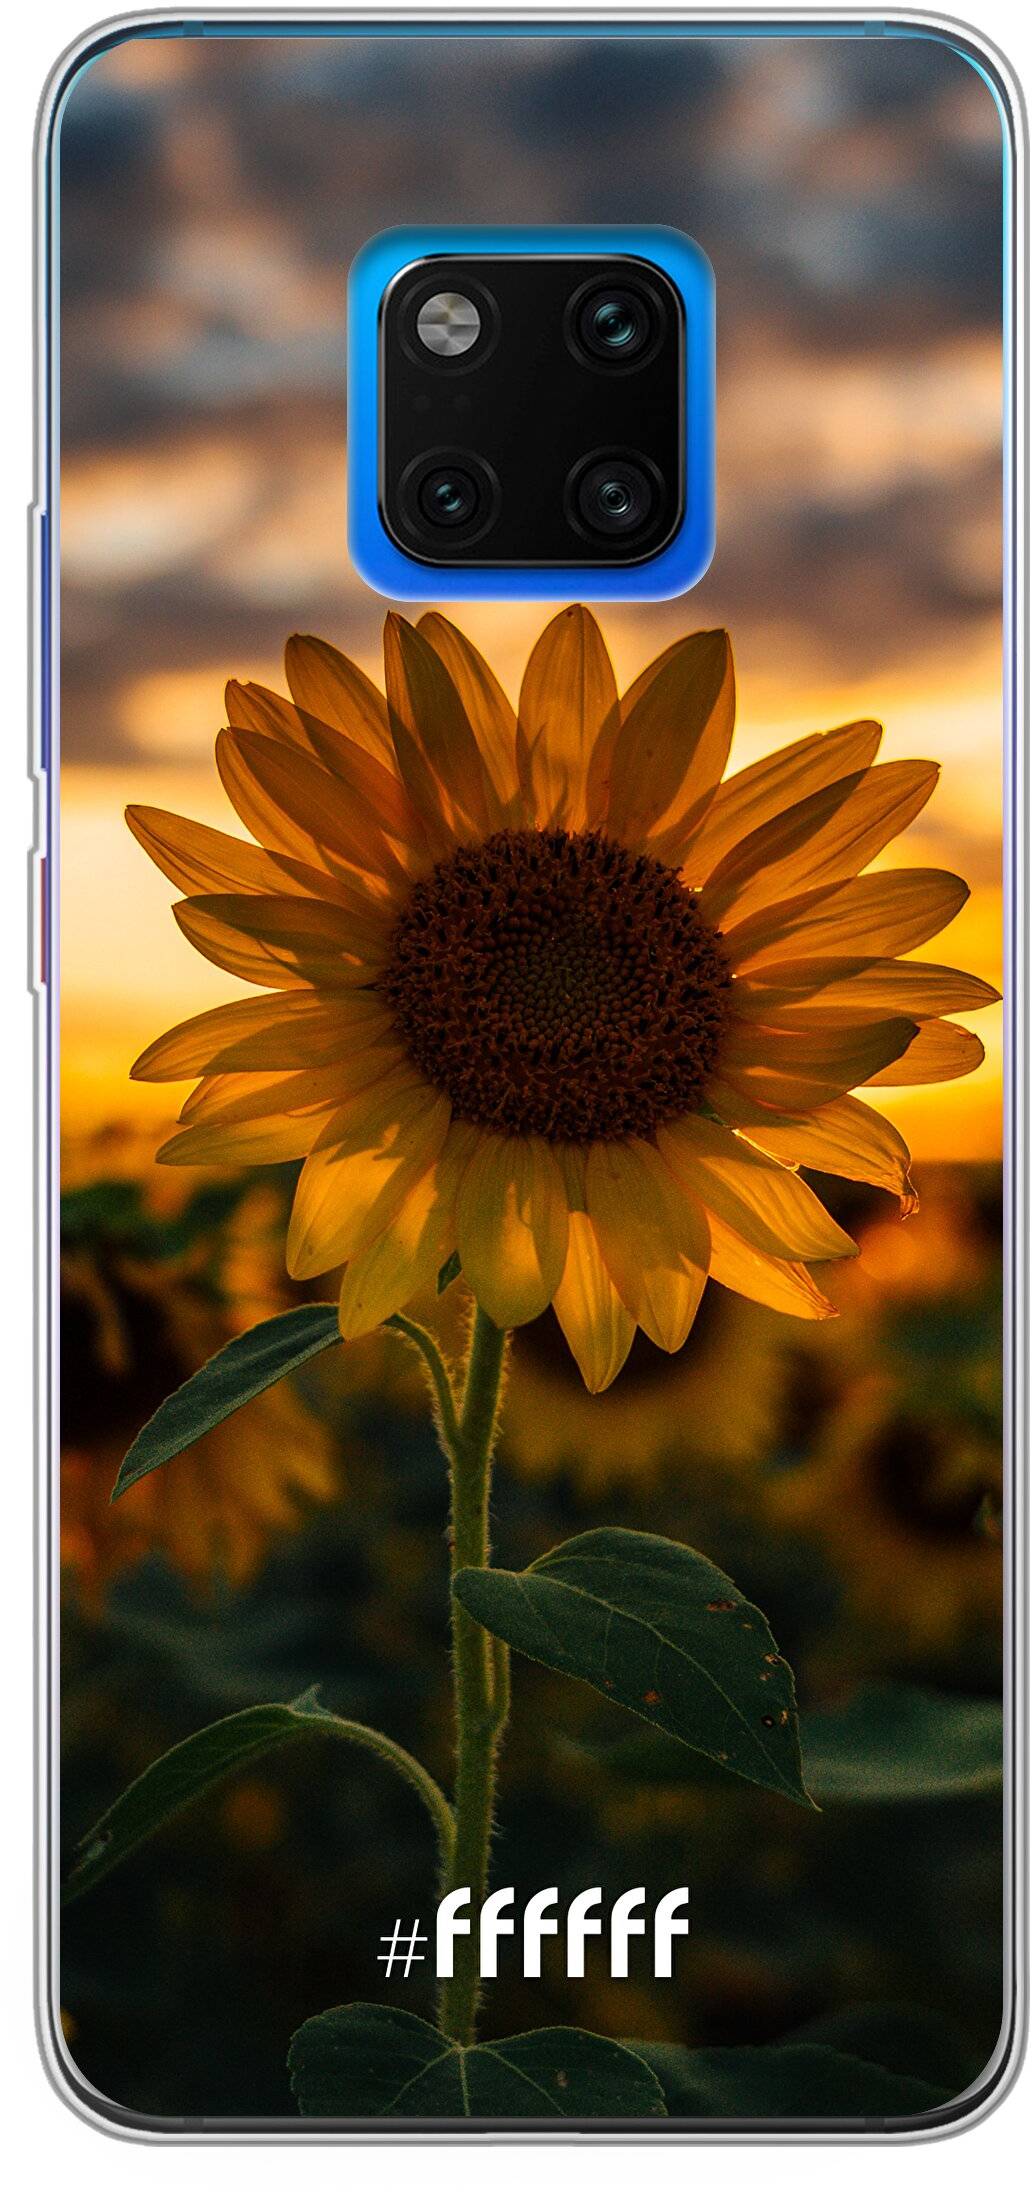 Sunset Sunflower Mate 20 Pro